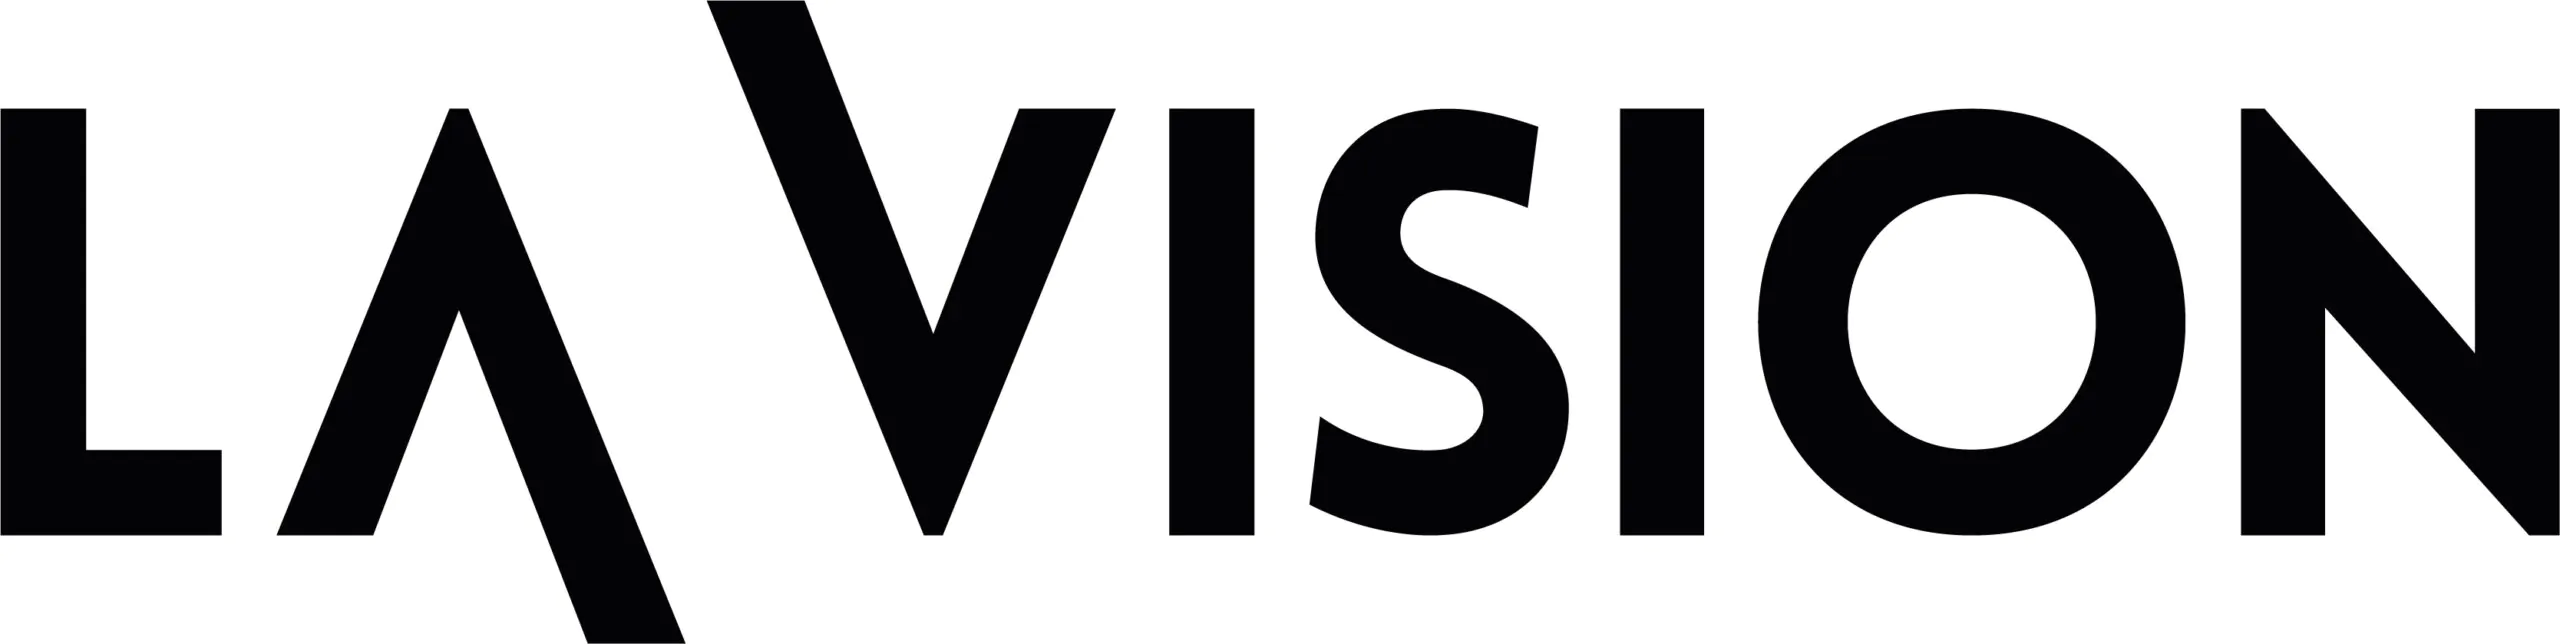 la vision typemark logo scaled